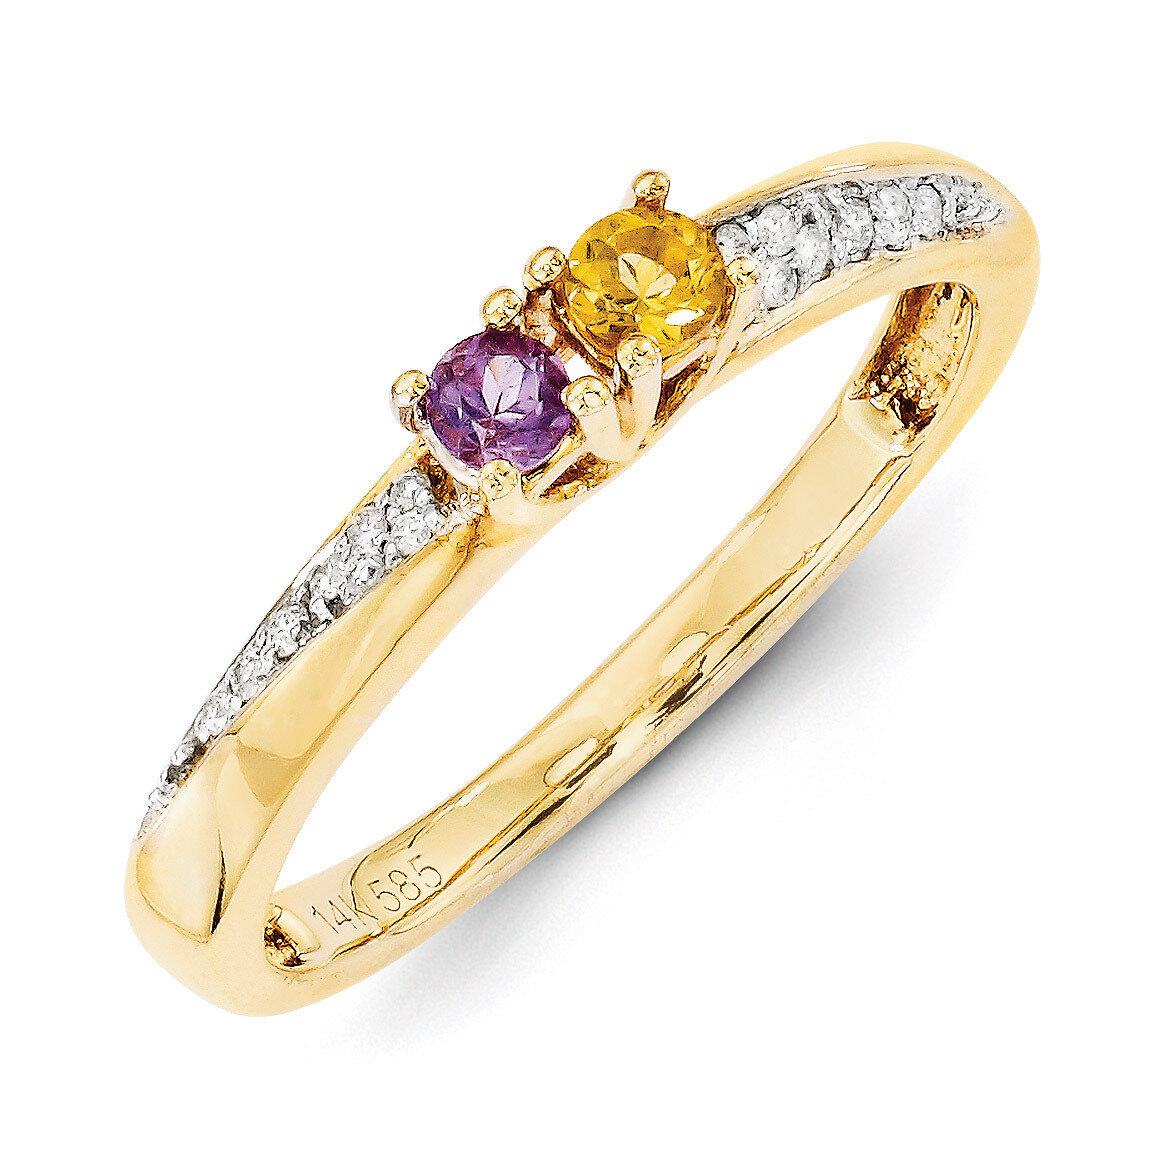 2 Birthstones Family Jewelry Diamond Semi-Set Ring 14k Yellow Gold XMR36/2